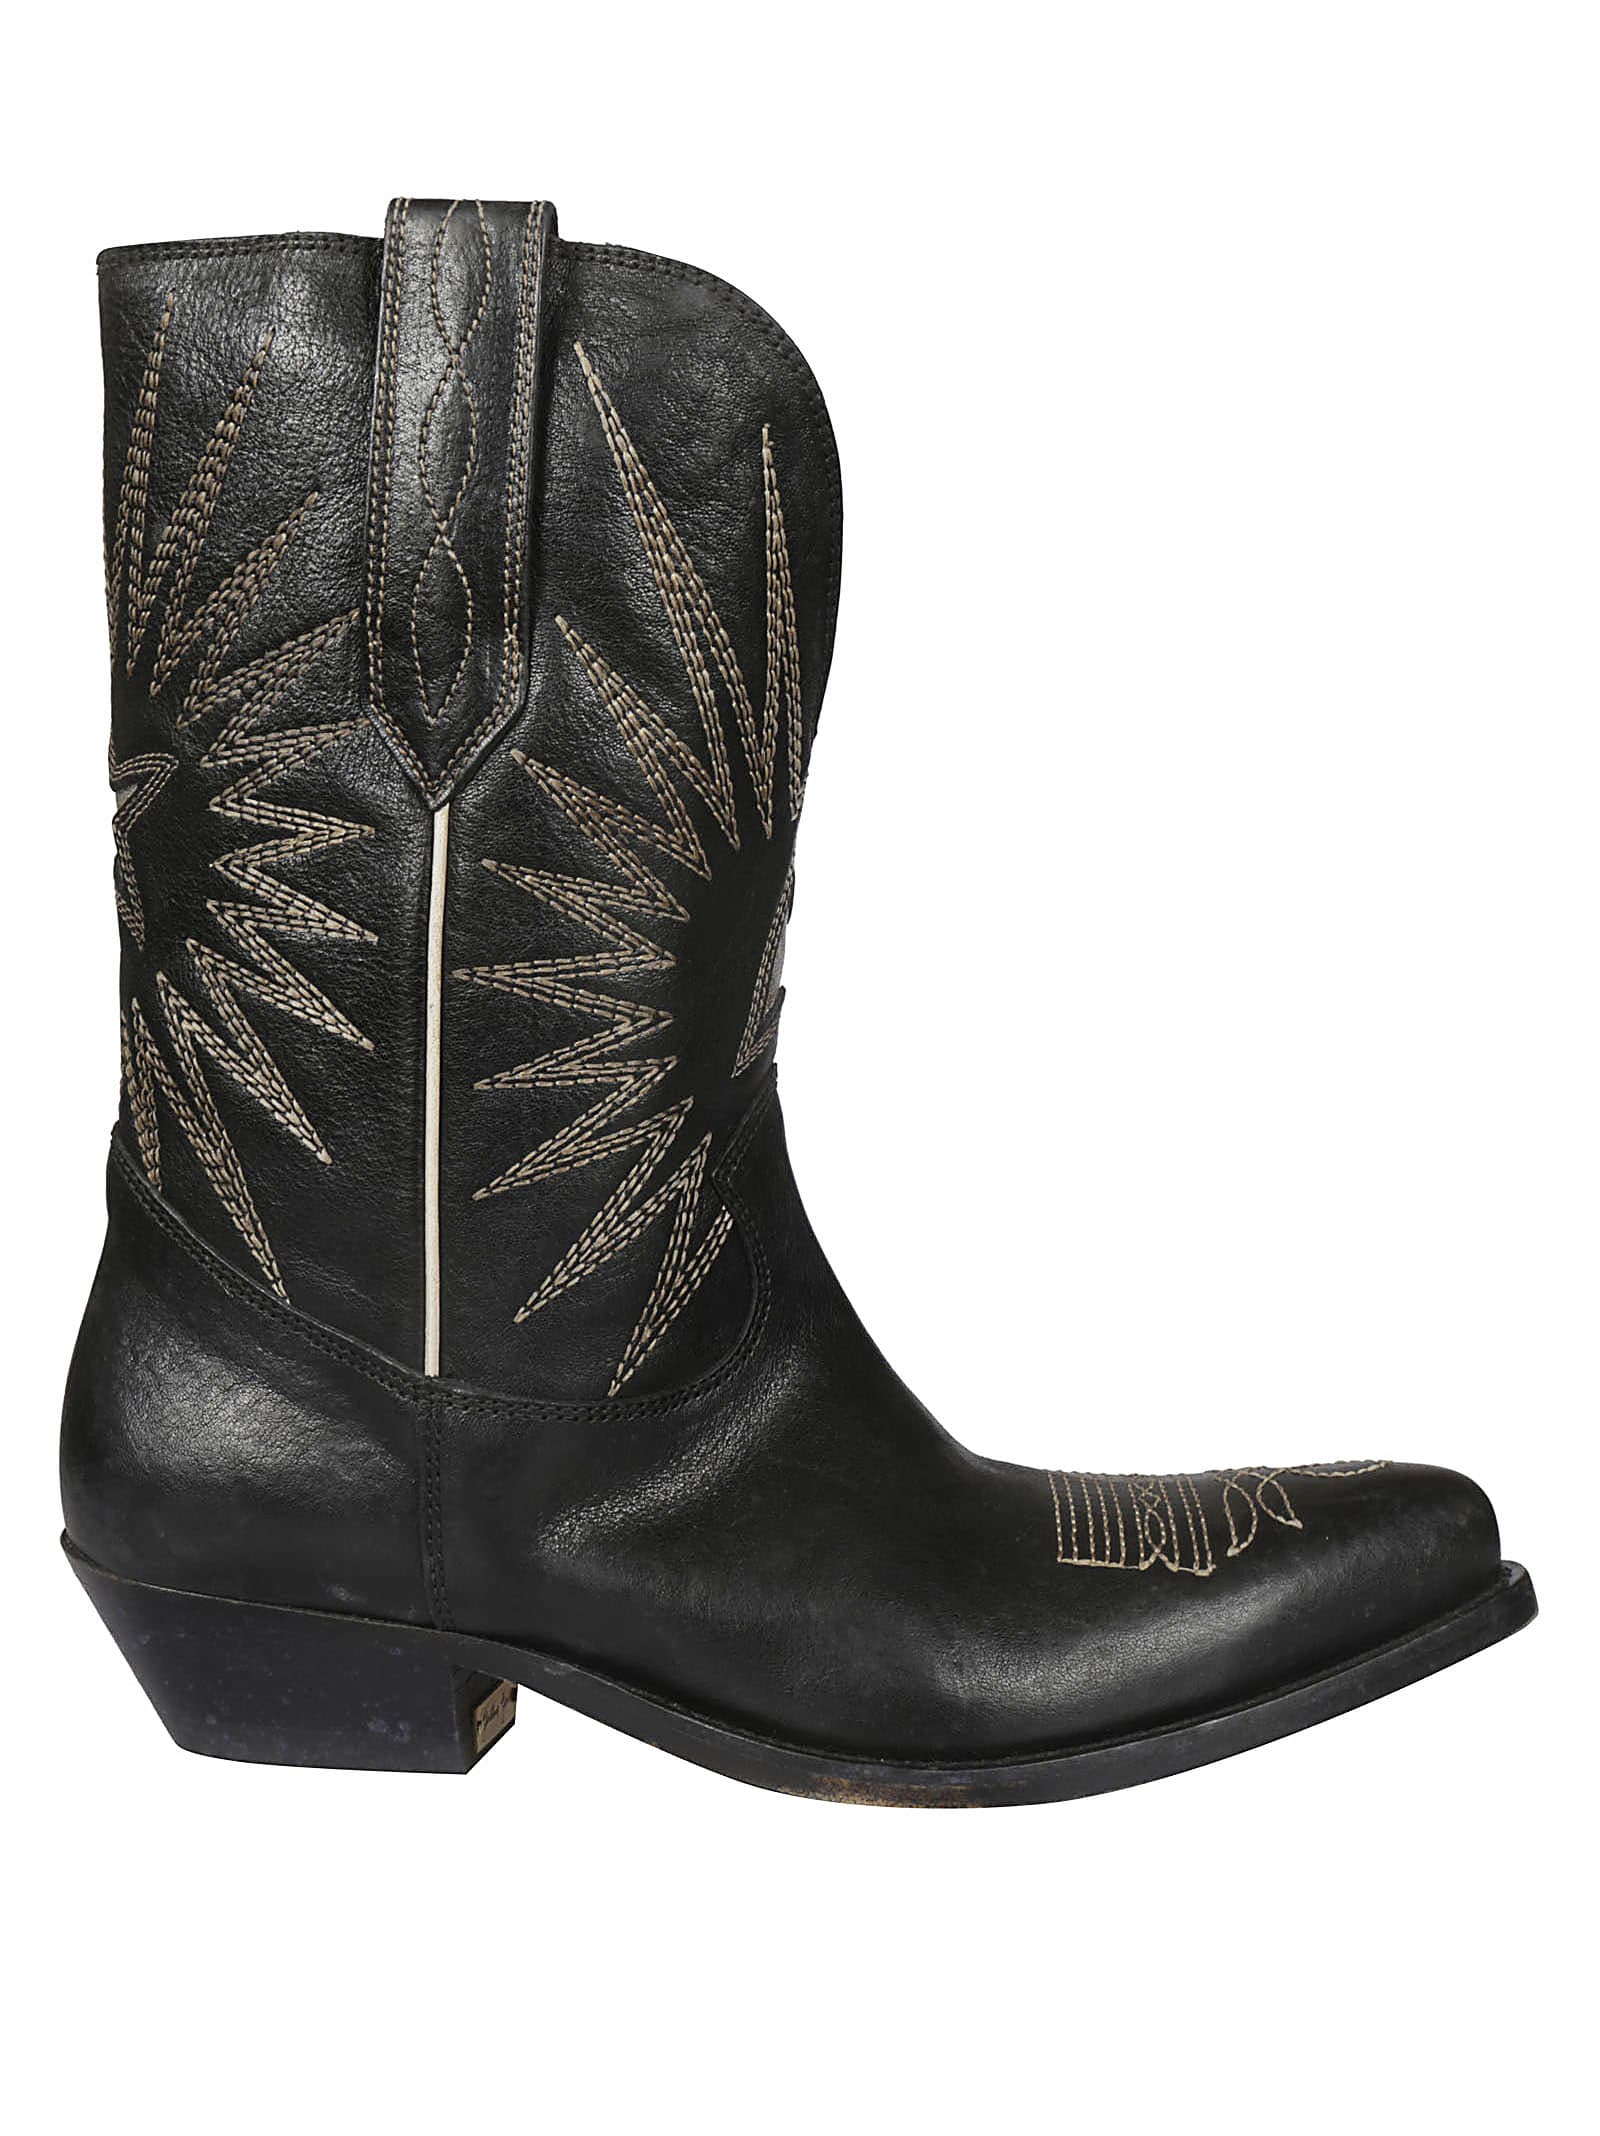 star cowboy boots